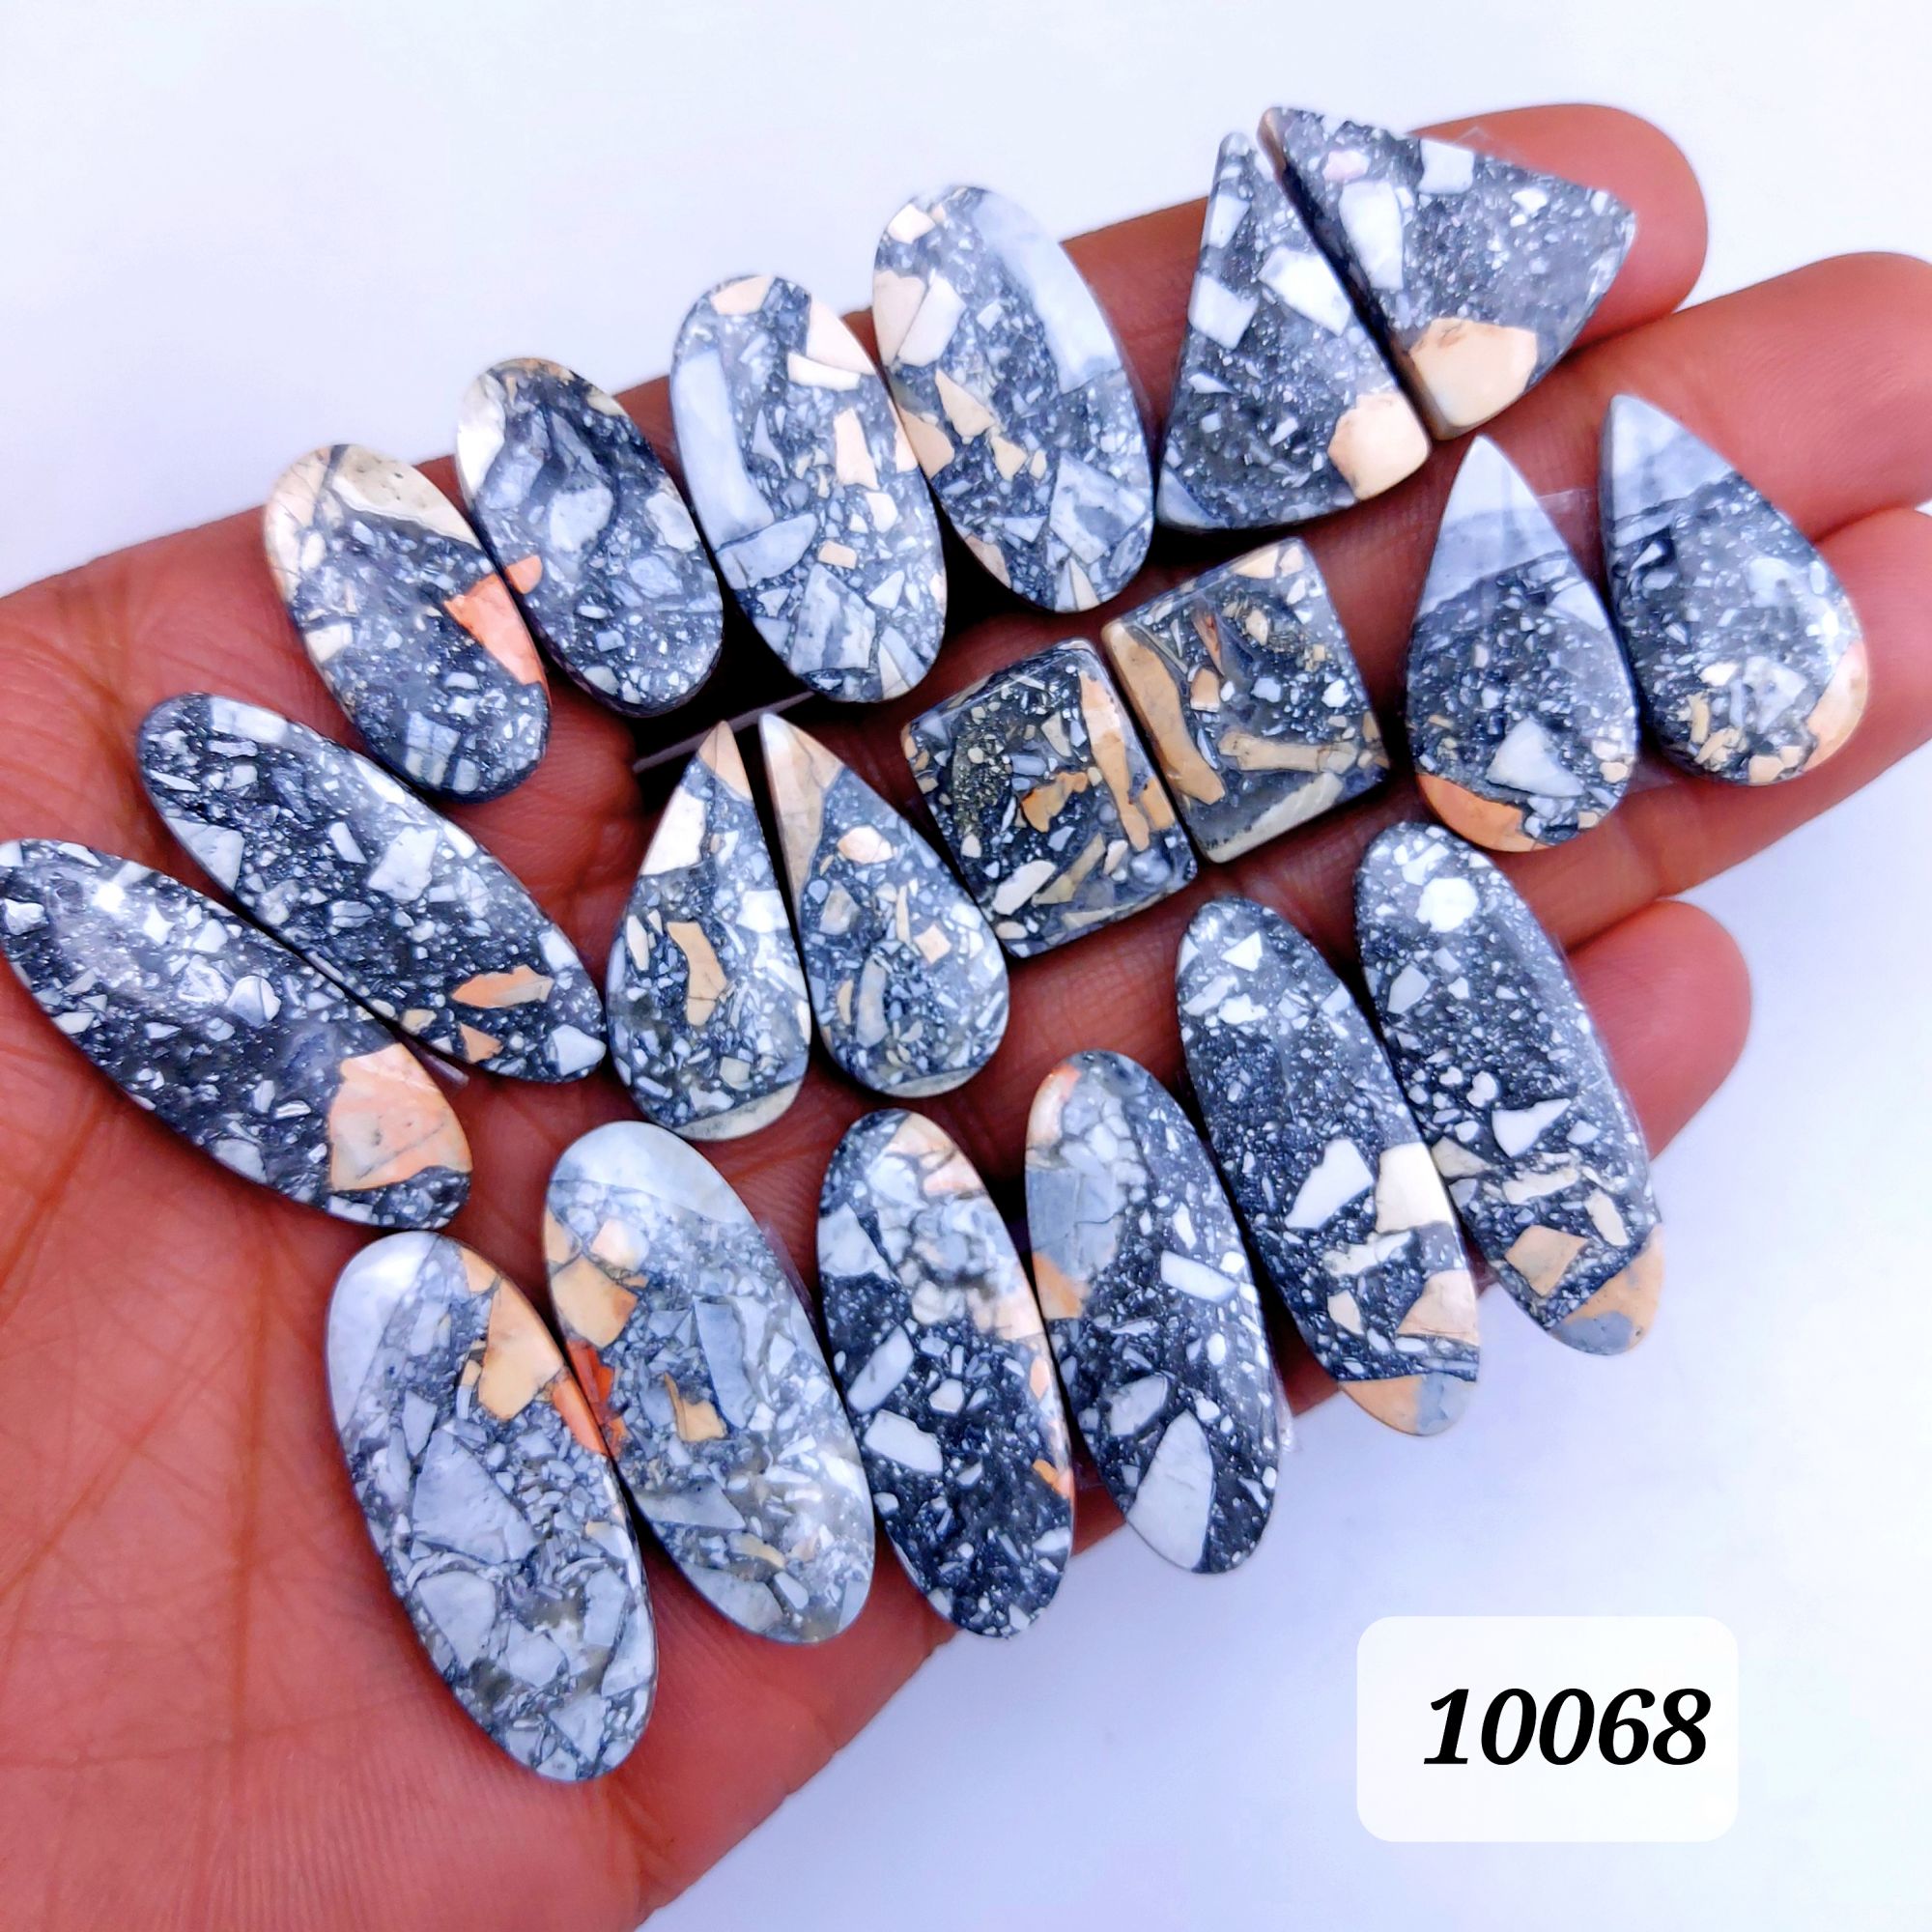 10Pcs 288Cts Natural Maligano Jasper Cabochon Pair Lot Back Side Unpolished Semi-Precious Gemstones For Jewelry Making 32x13 22x11mm #10068